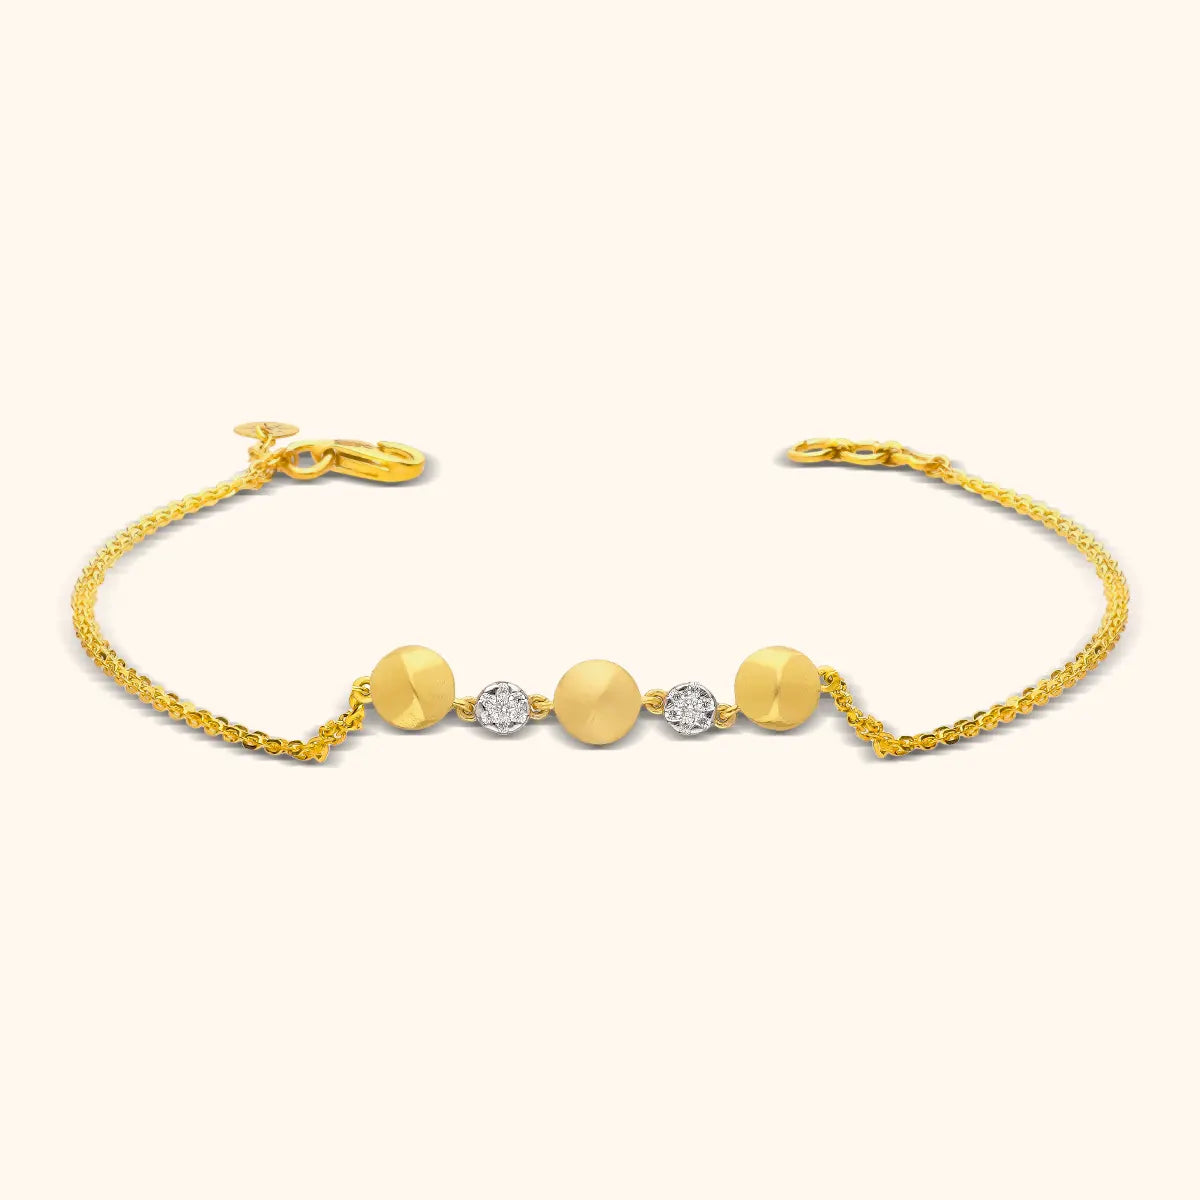 Delta Triangle Bracelet-Gold - Shop1913 by RG Apparel Co.